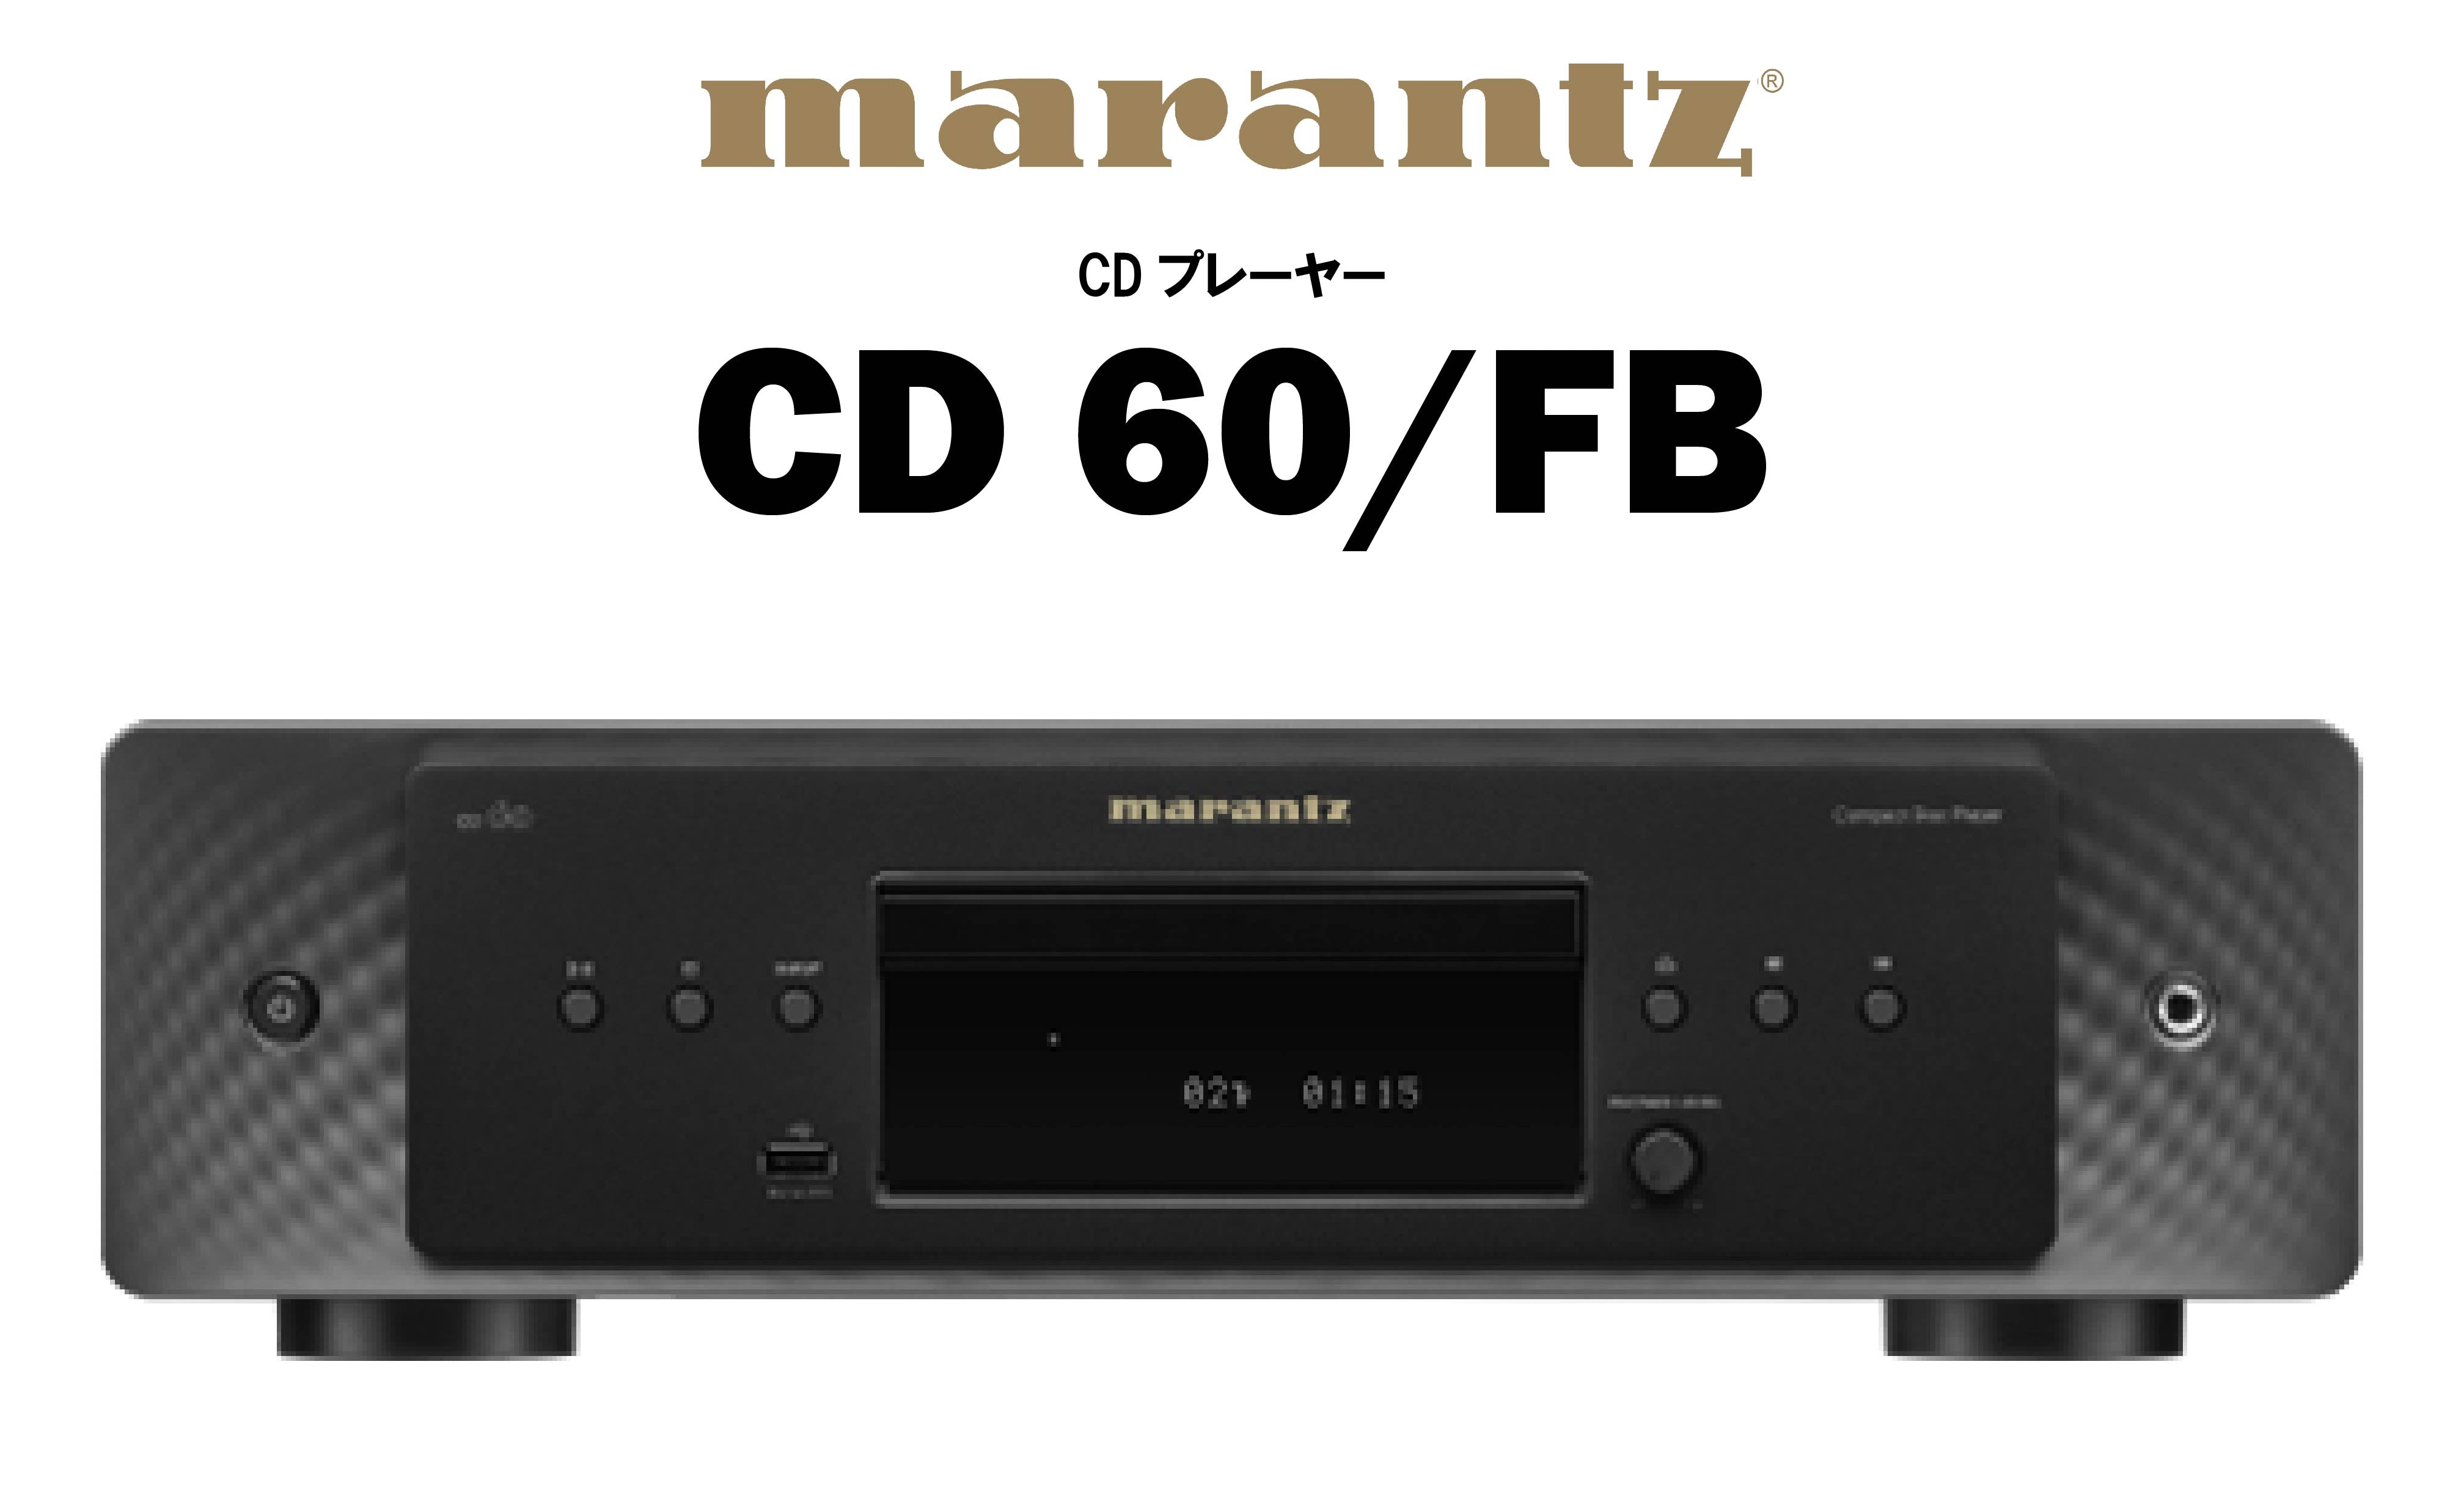 marantz CD 60 FB CDプレーヤー – CORE オーディオコア